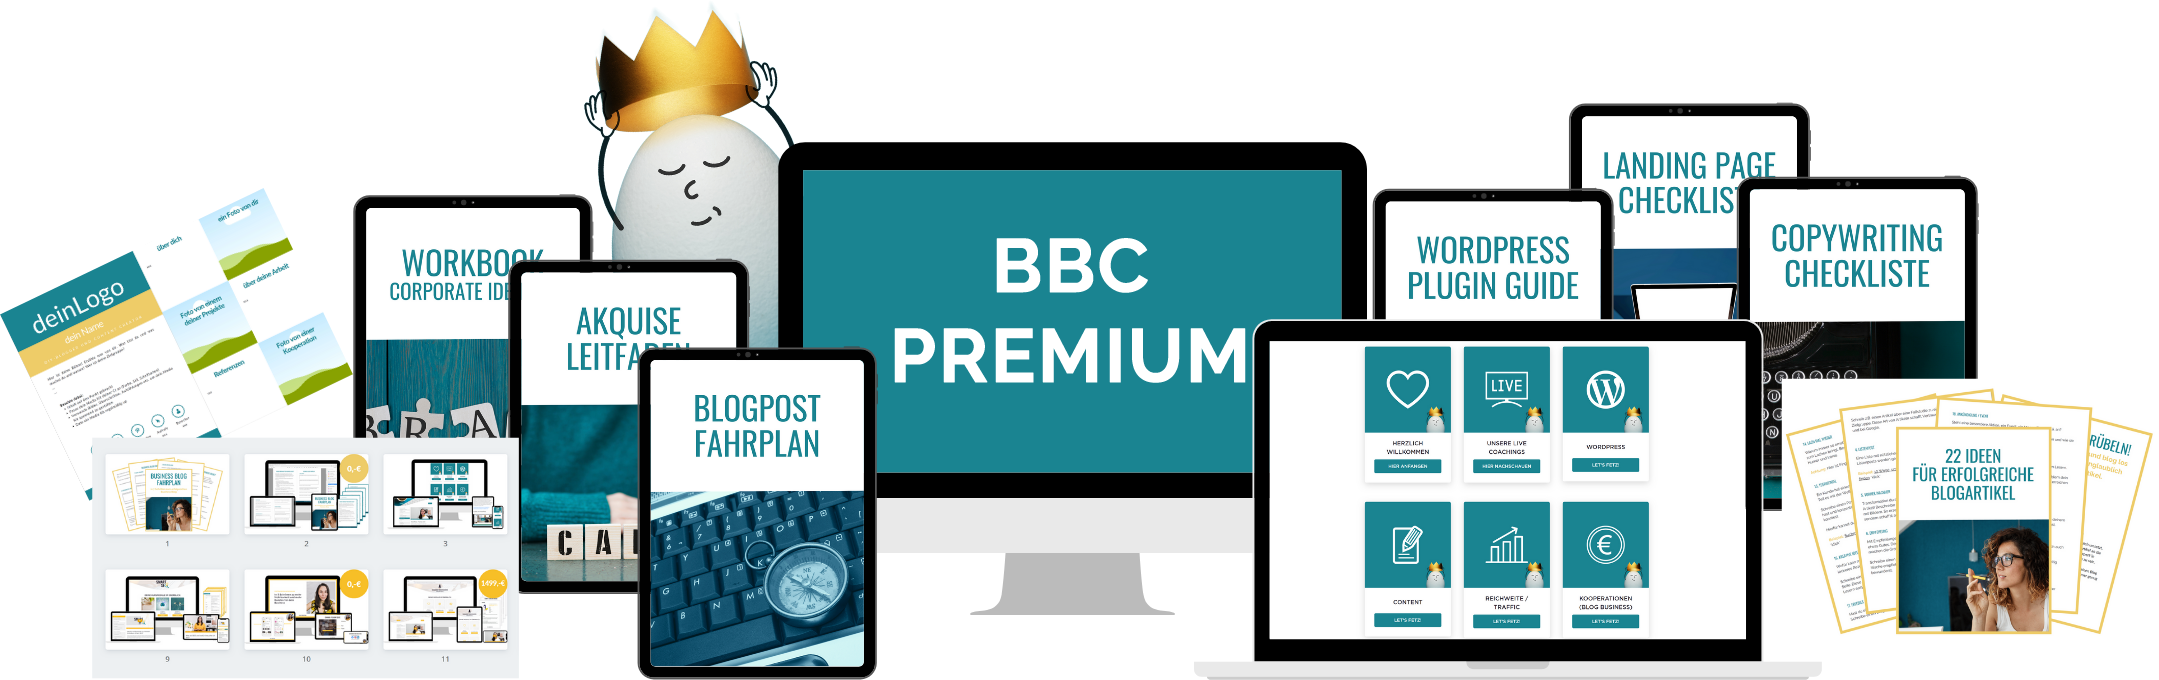 BBC Premium | Business Blogger Coaching Filiz Odenthal